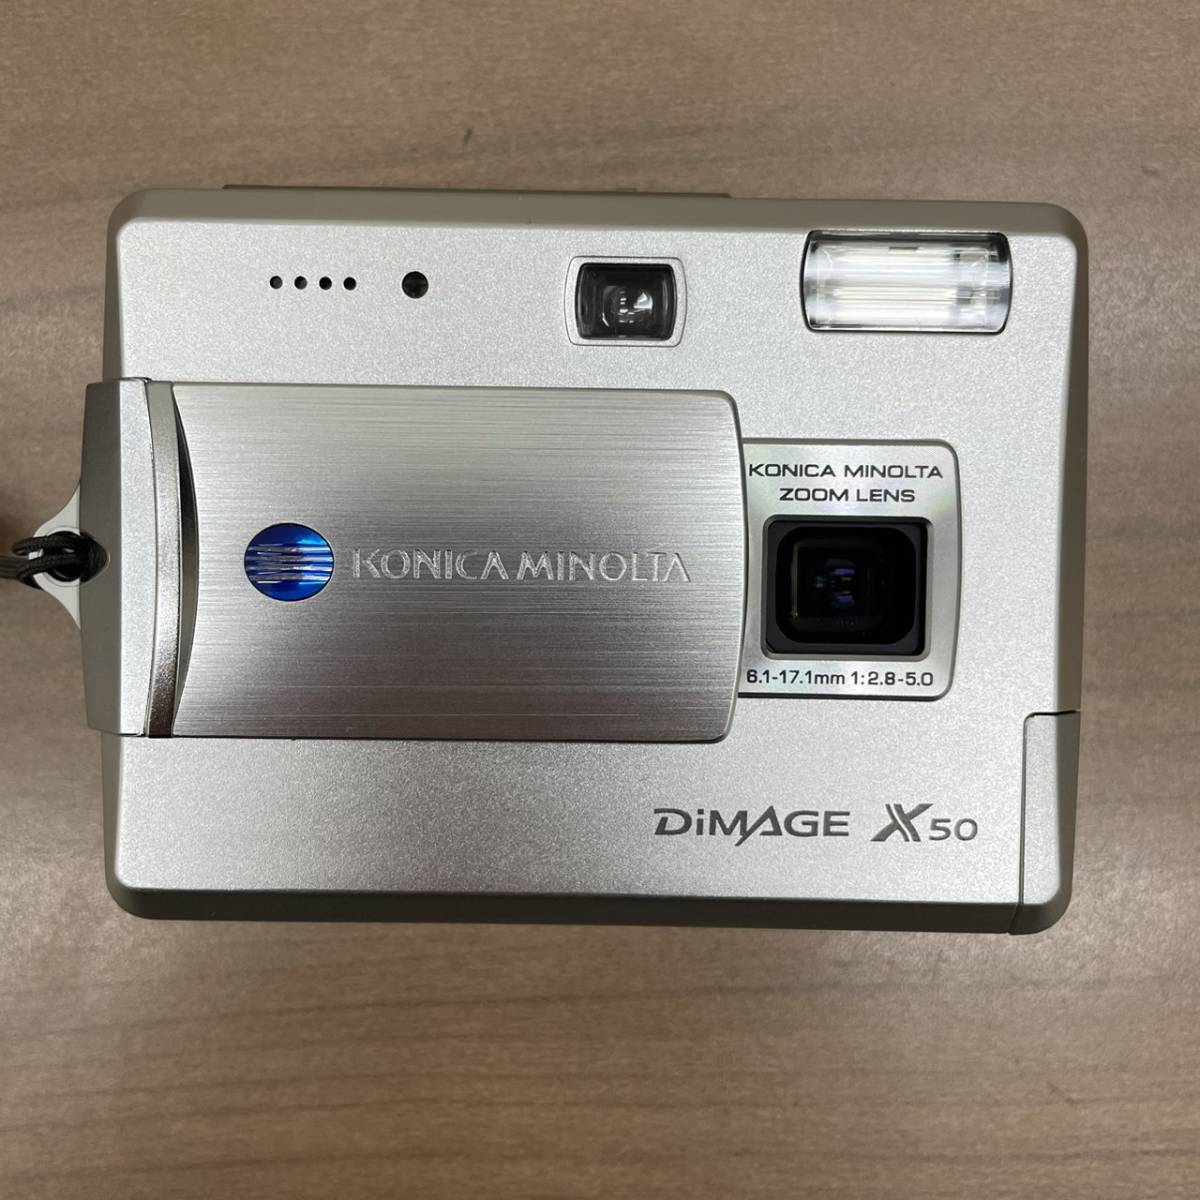 【KONICA MINOLTA】DIMAGE X50 ZOOM LENS 6.1-17.1mm/1:2.8-5.0 デジタルカメラ コンパクトカメラ ケース付き★13385_画像2